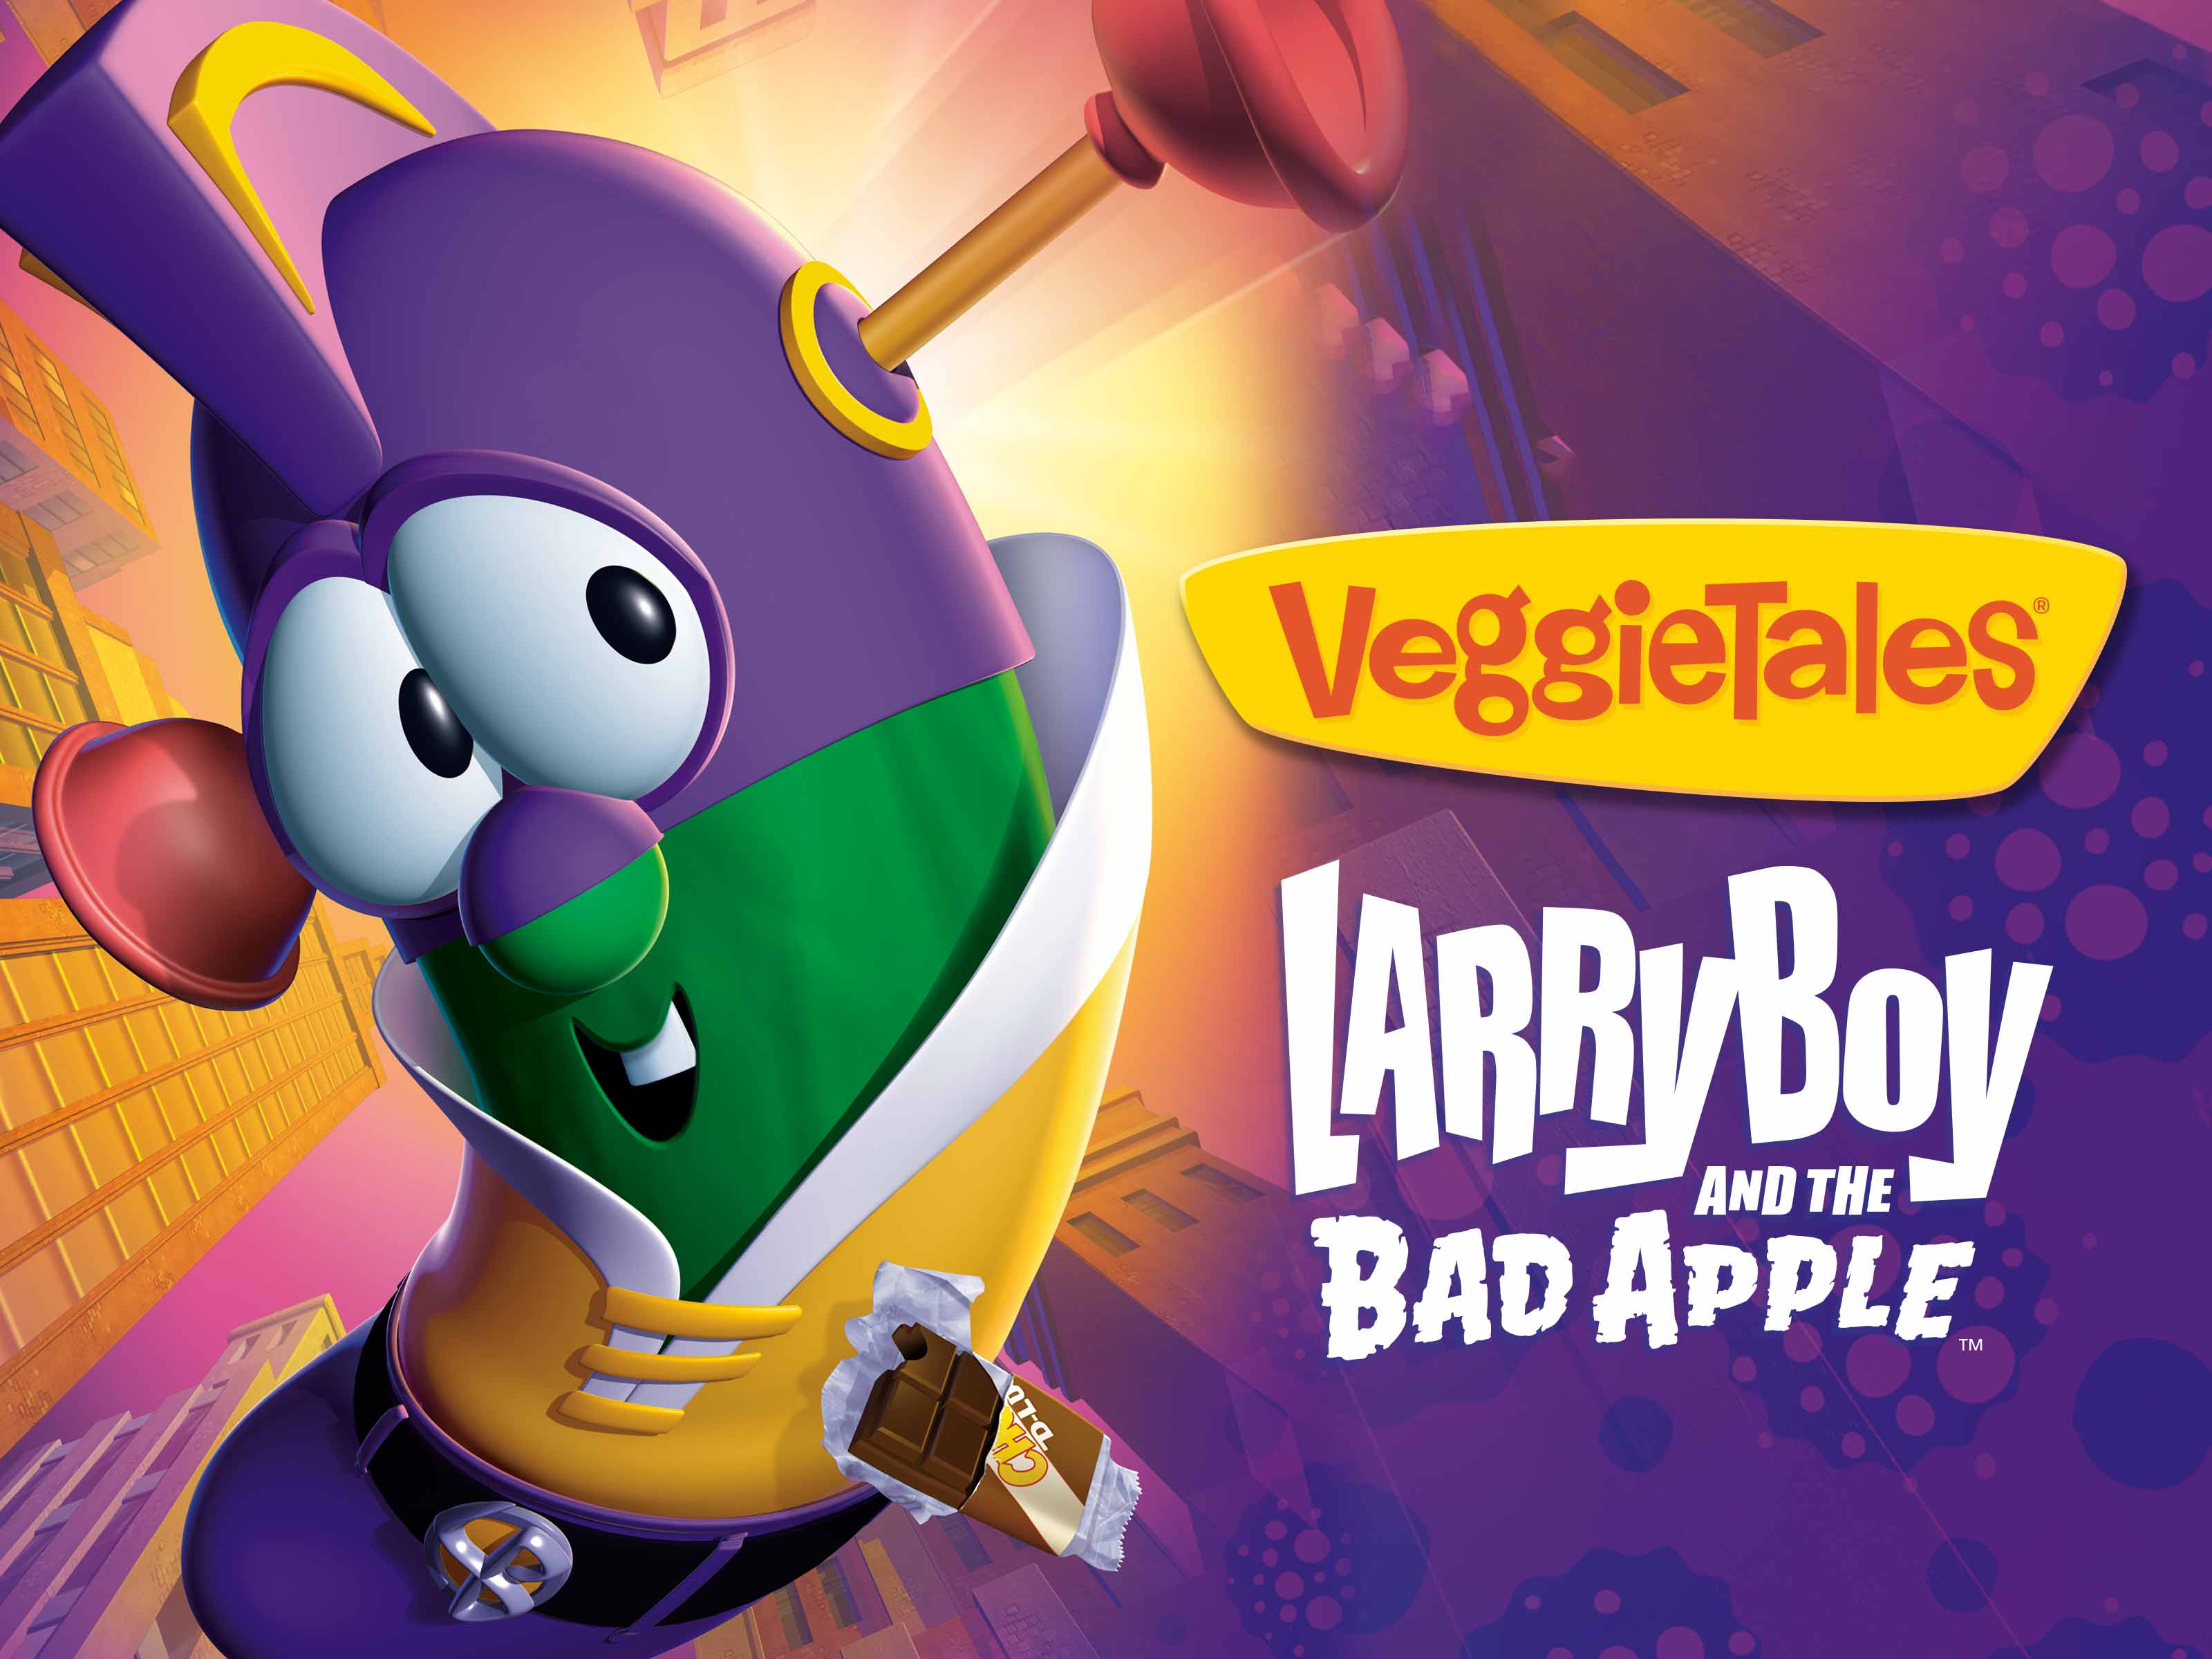 Veggietales Larryboy And The Bad Apple Pure Flix